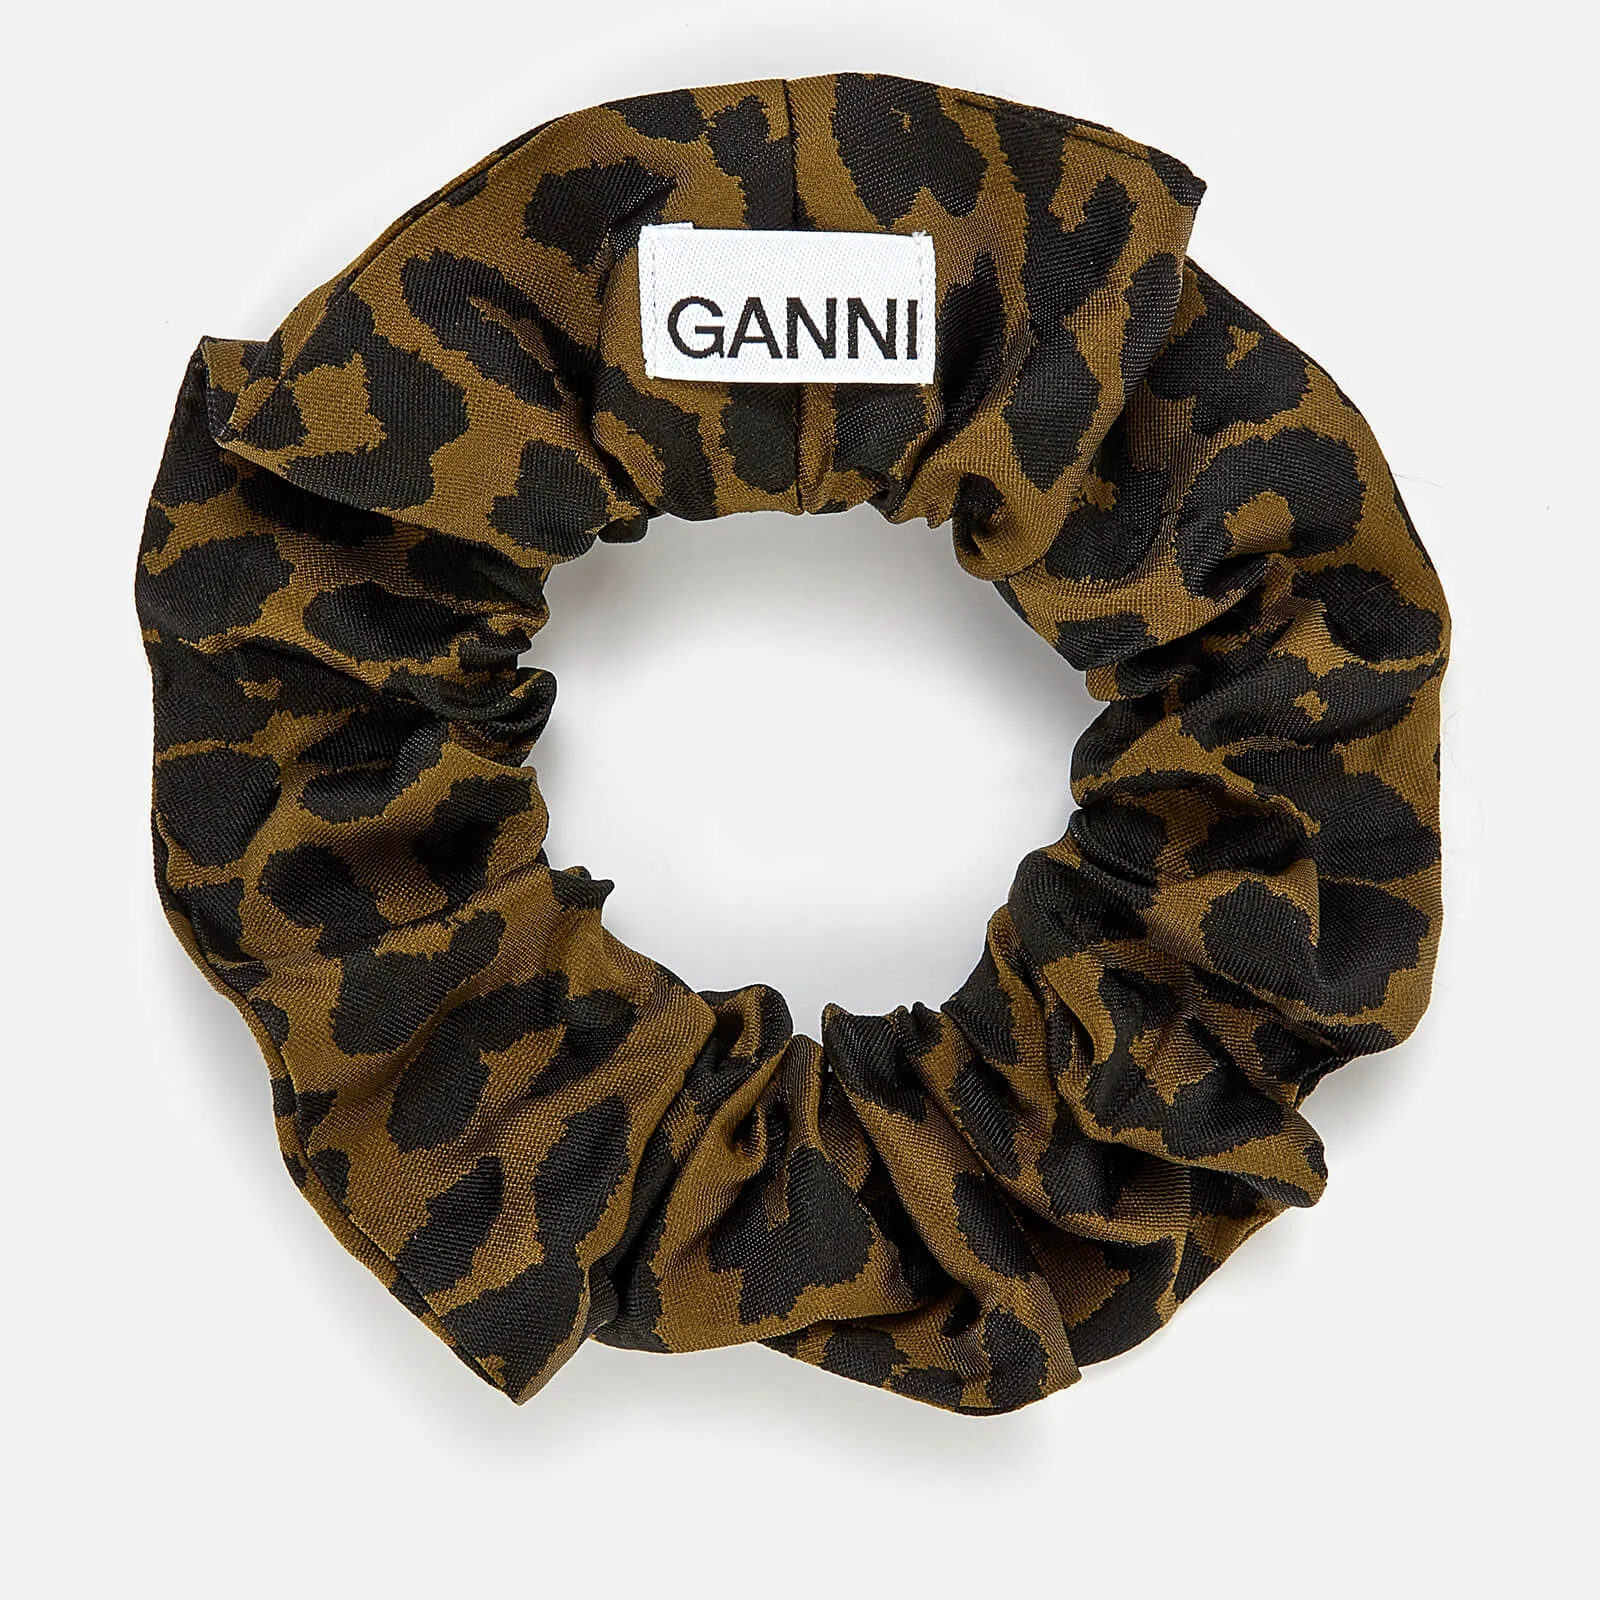 Ganni Women's Crispy Jacquard Scrunchie - Olive Drab Image 1